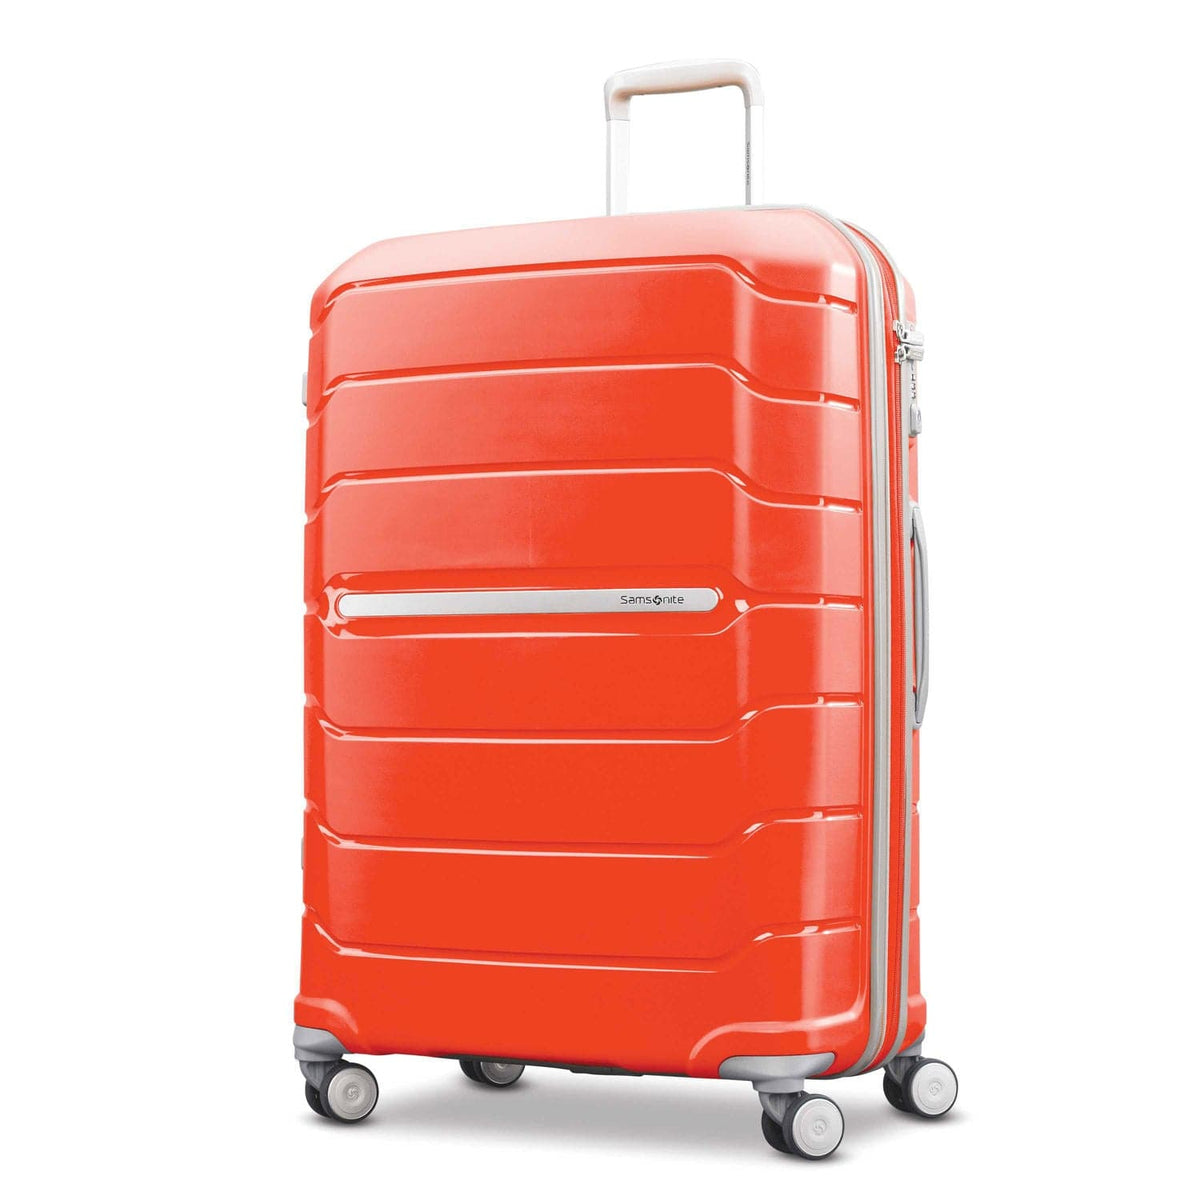 Samsonite Freeform 28" Hardside Spinner Luggage